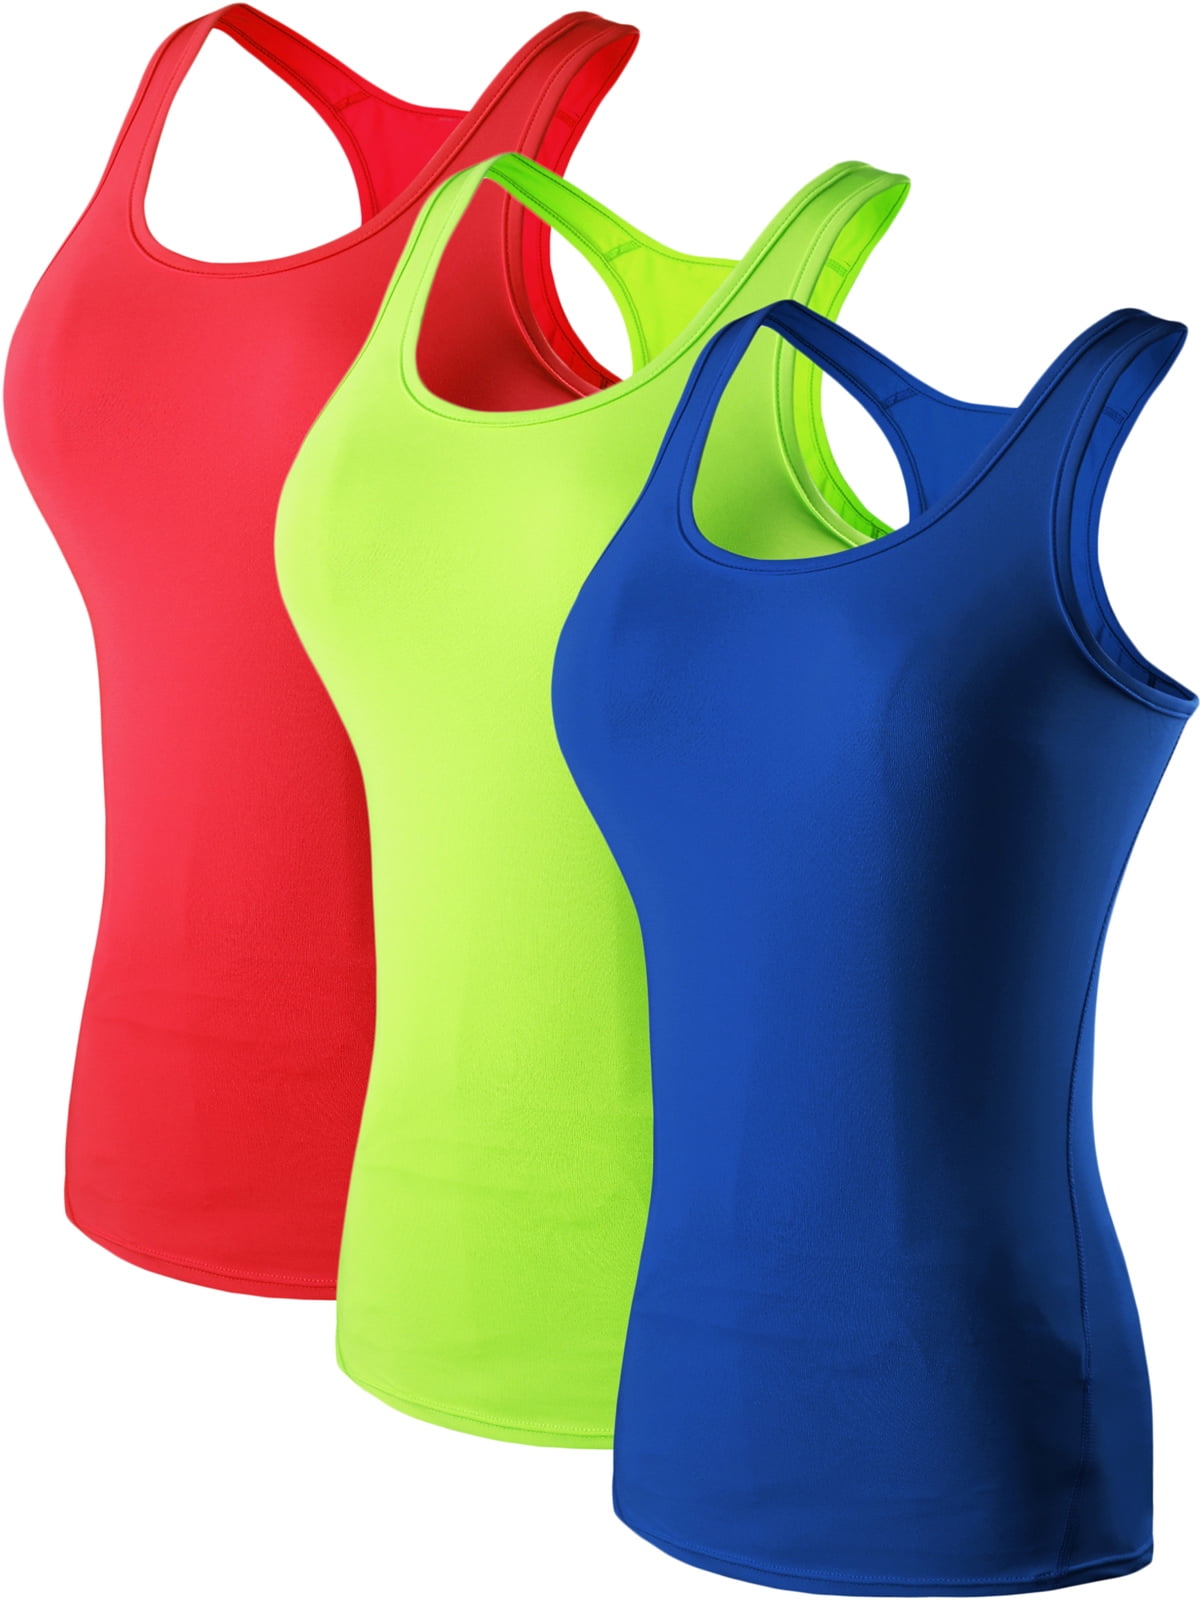 NELEUS Womens Compression Base Layer Dry Fit Tank Top 3 Pack,Black+Blue+White,US  Size M 